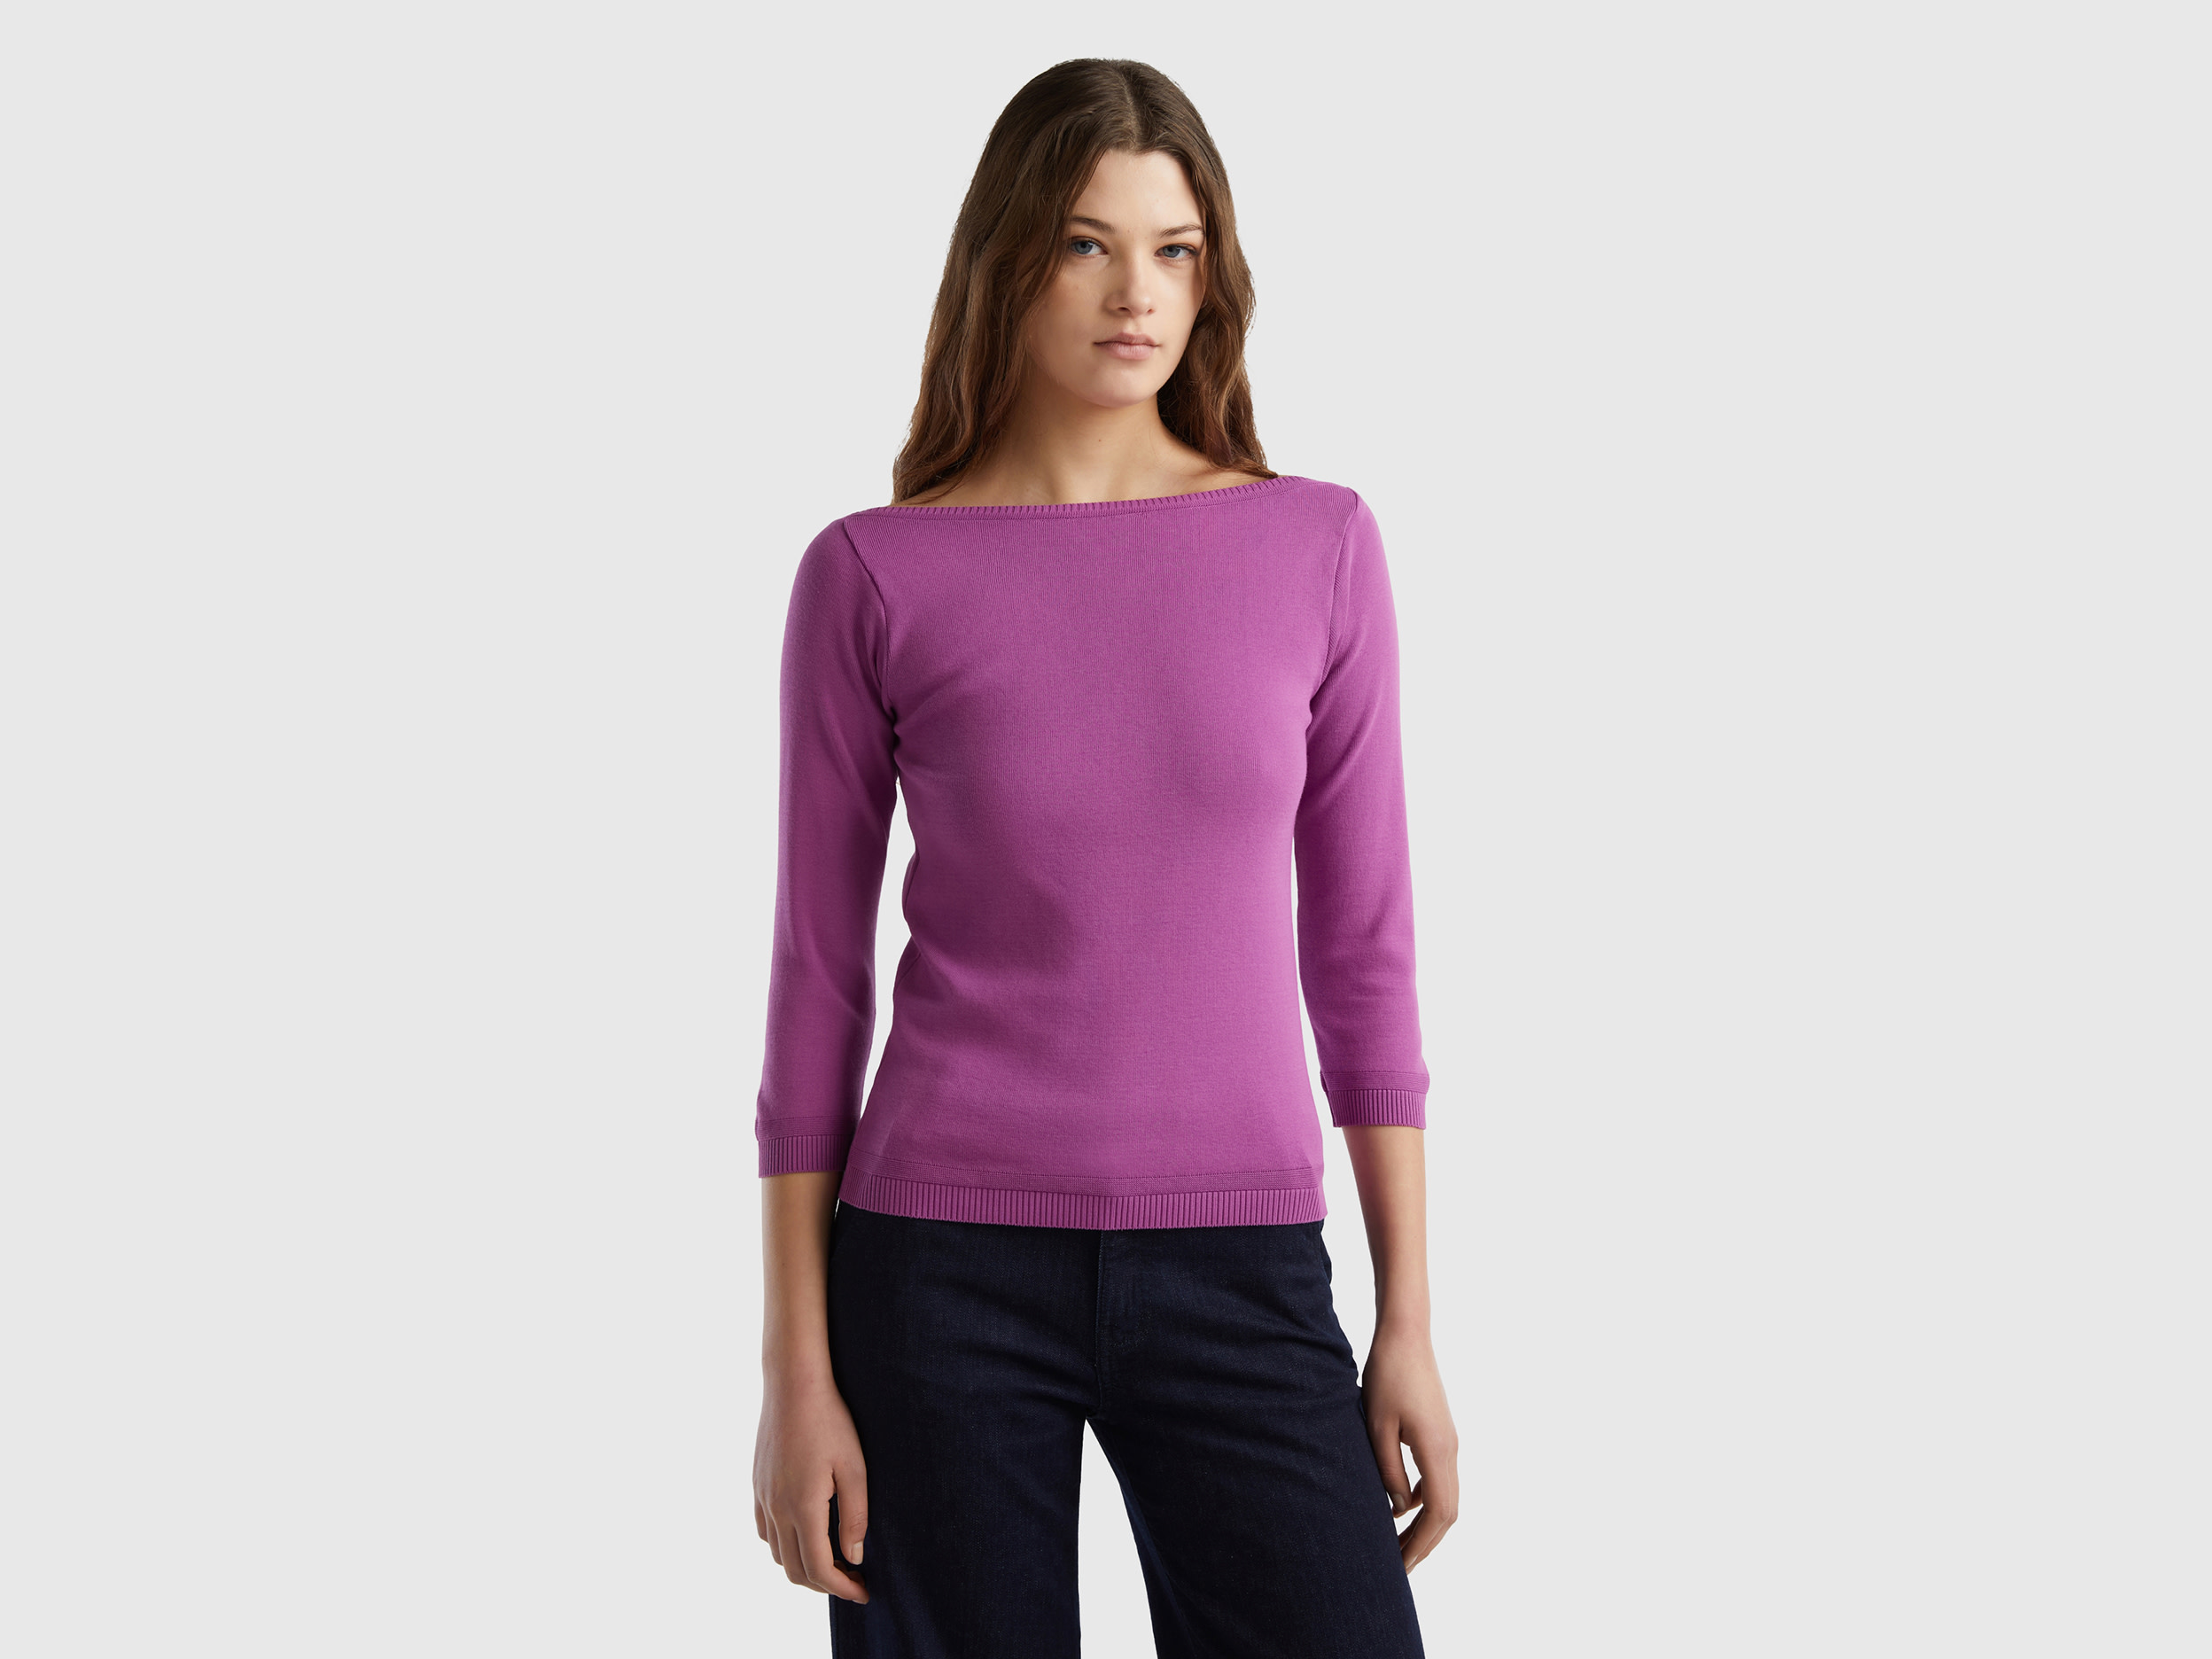 Benetton, 100% Cotton Boat Neck Sweater, size XL, Violet, Women